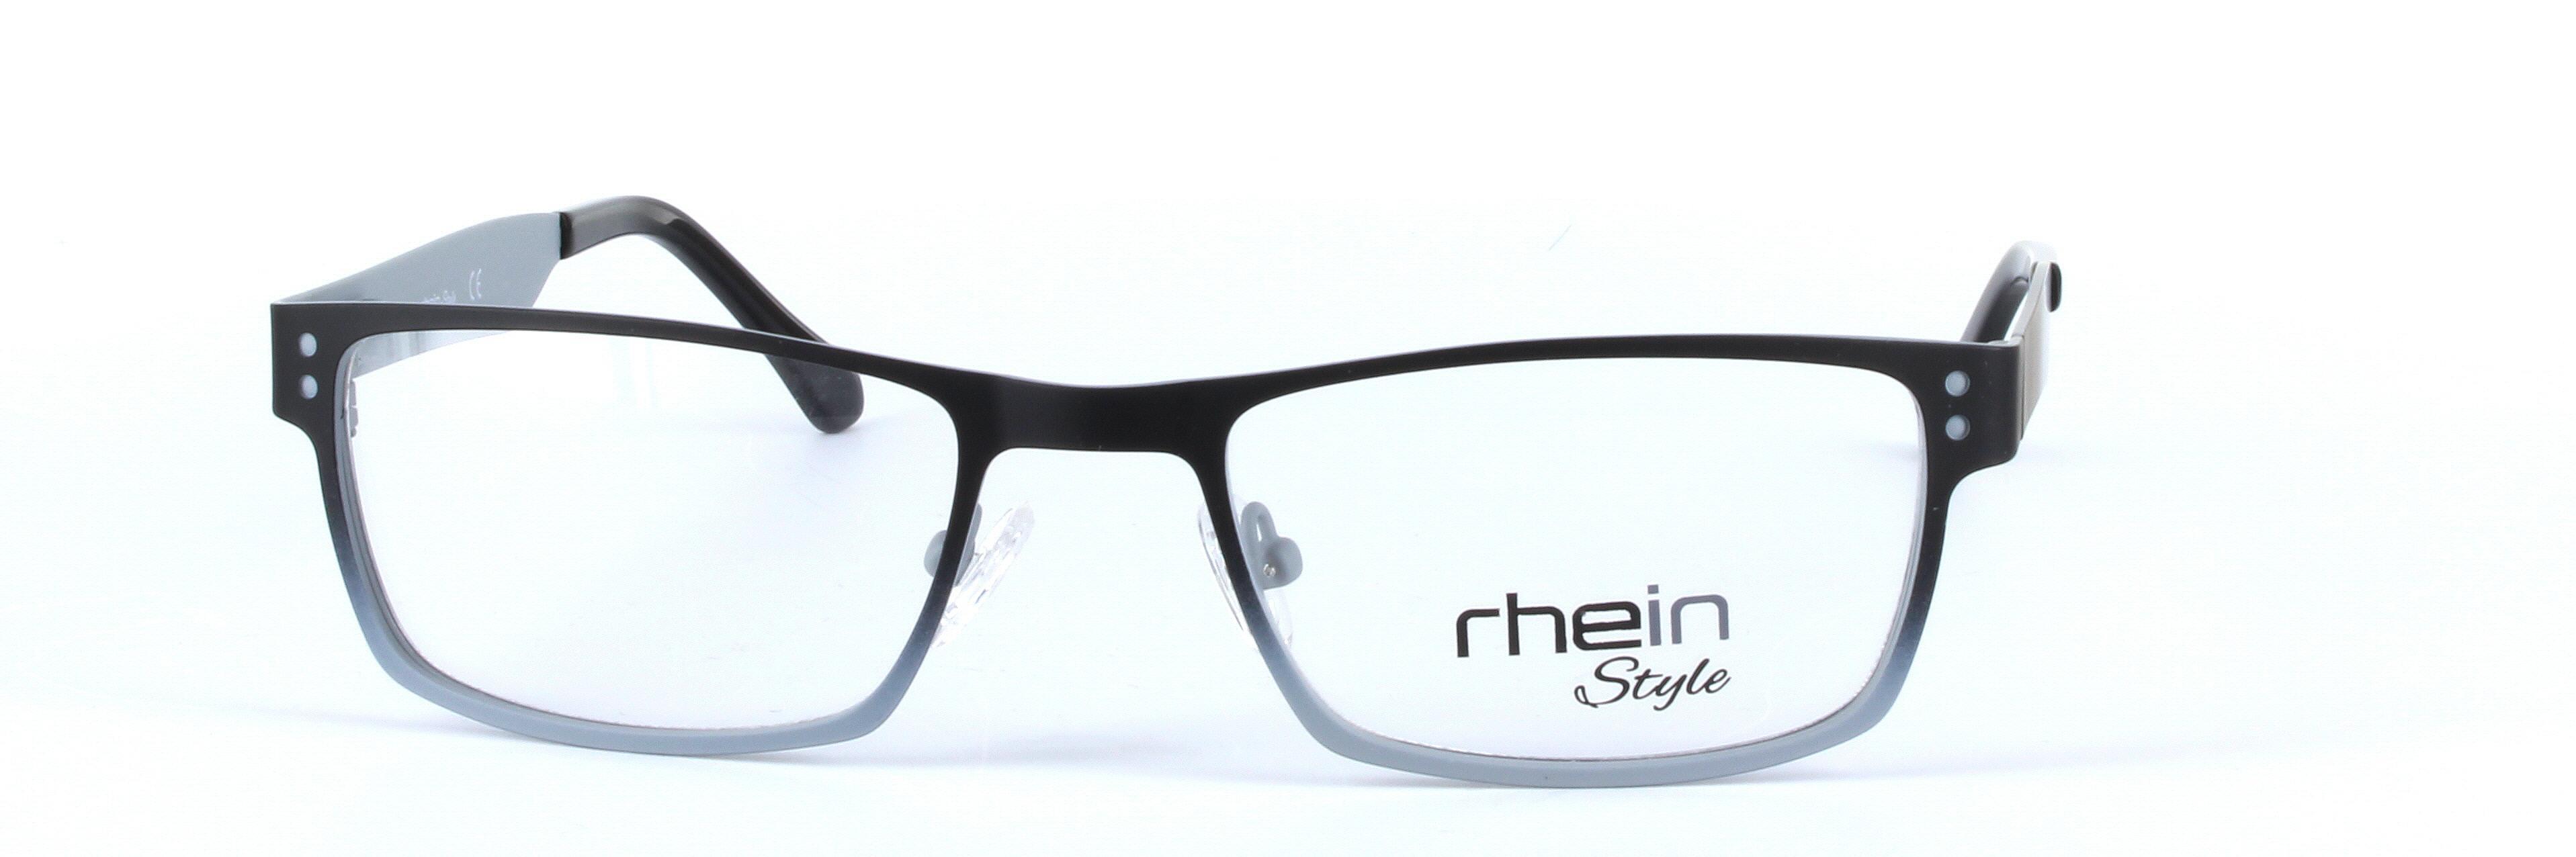 Ambleside Black and Silver Full Rim Rectangular Metal Glasses - Image View 5